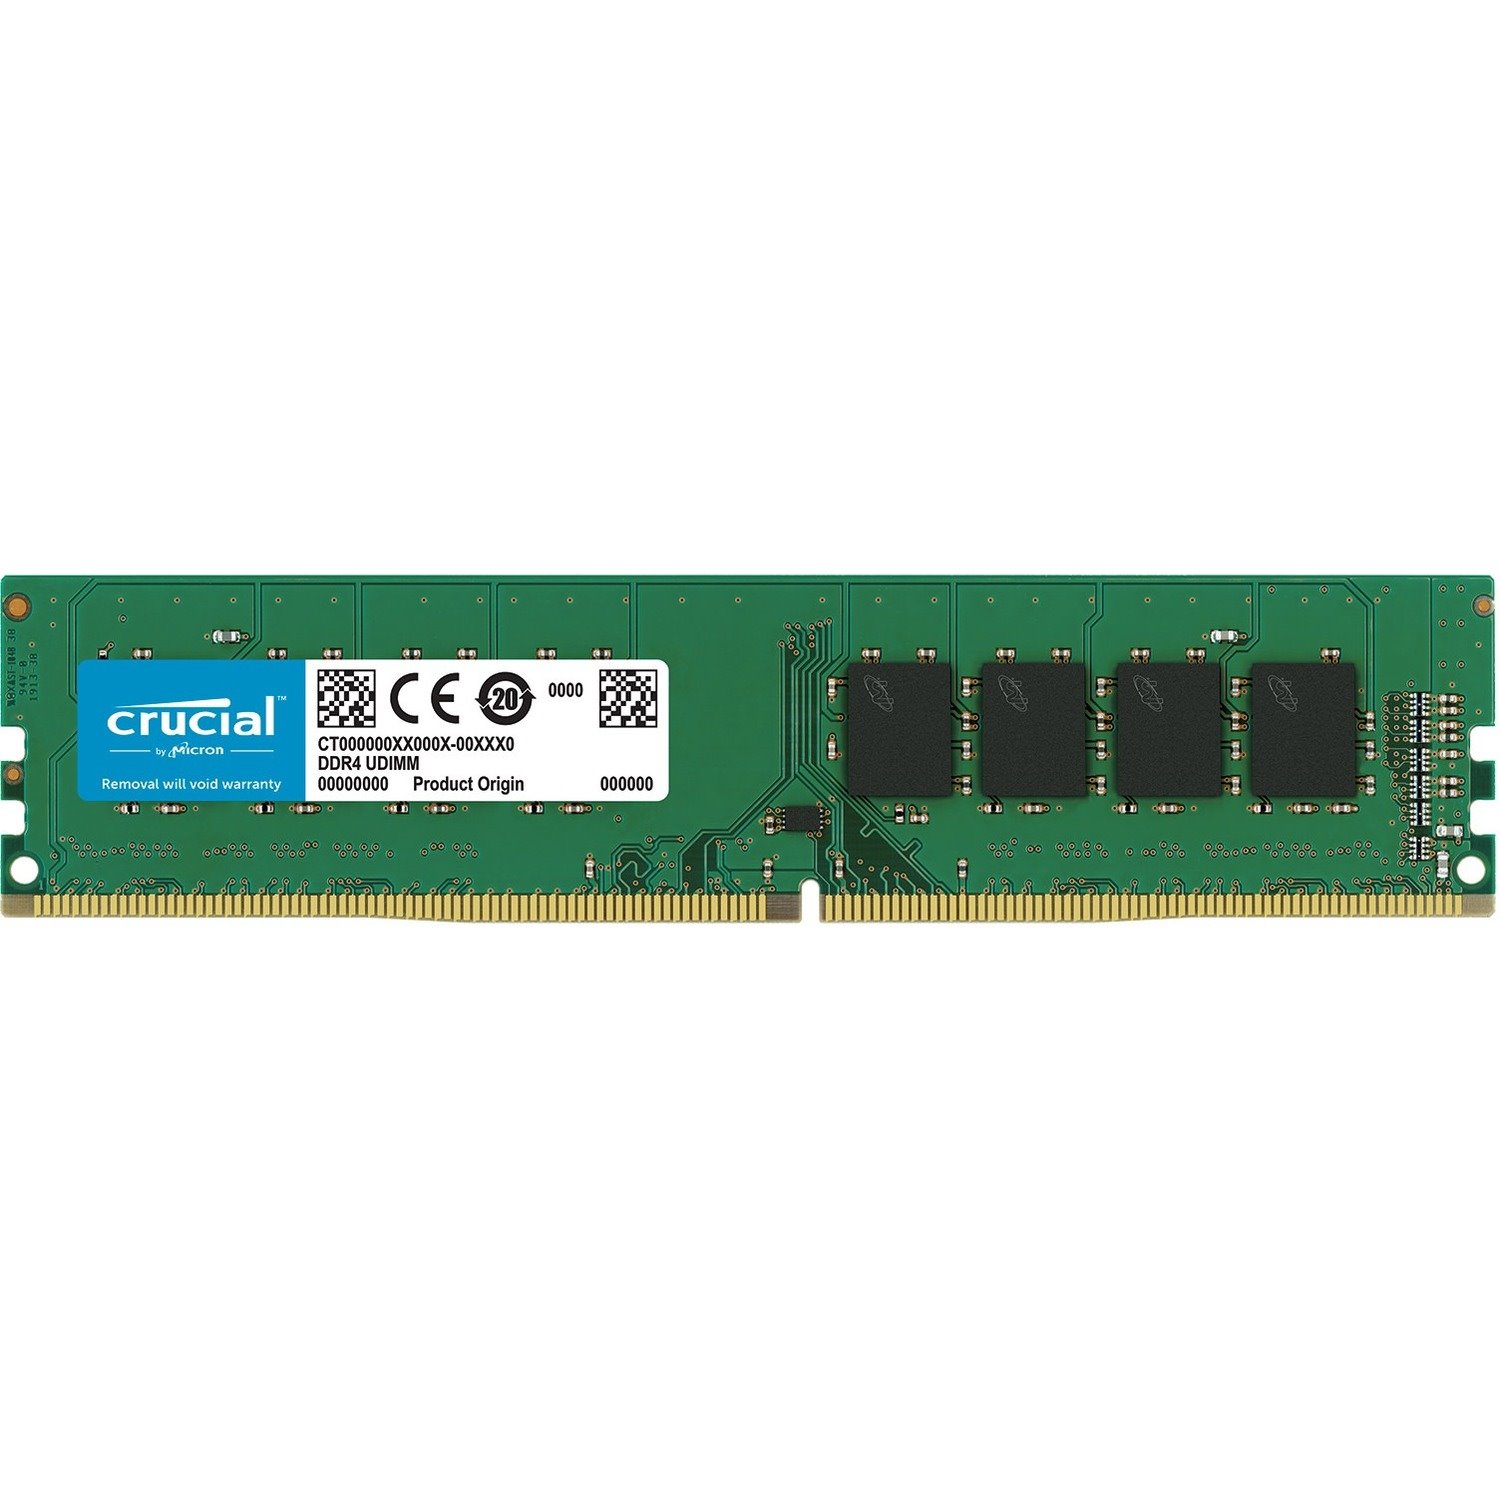 Crucial 8GB (1x8GB) DDR4 Udimm 2666MHz CL19 Single Ranked Desktop PC Memory Ram